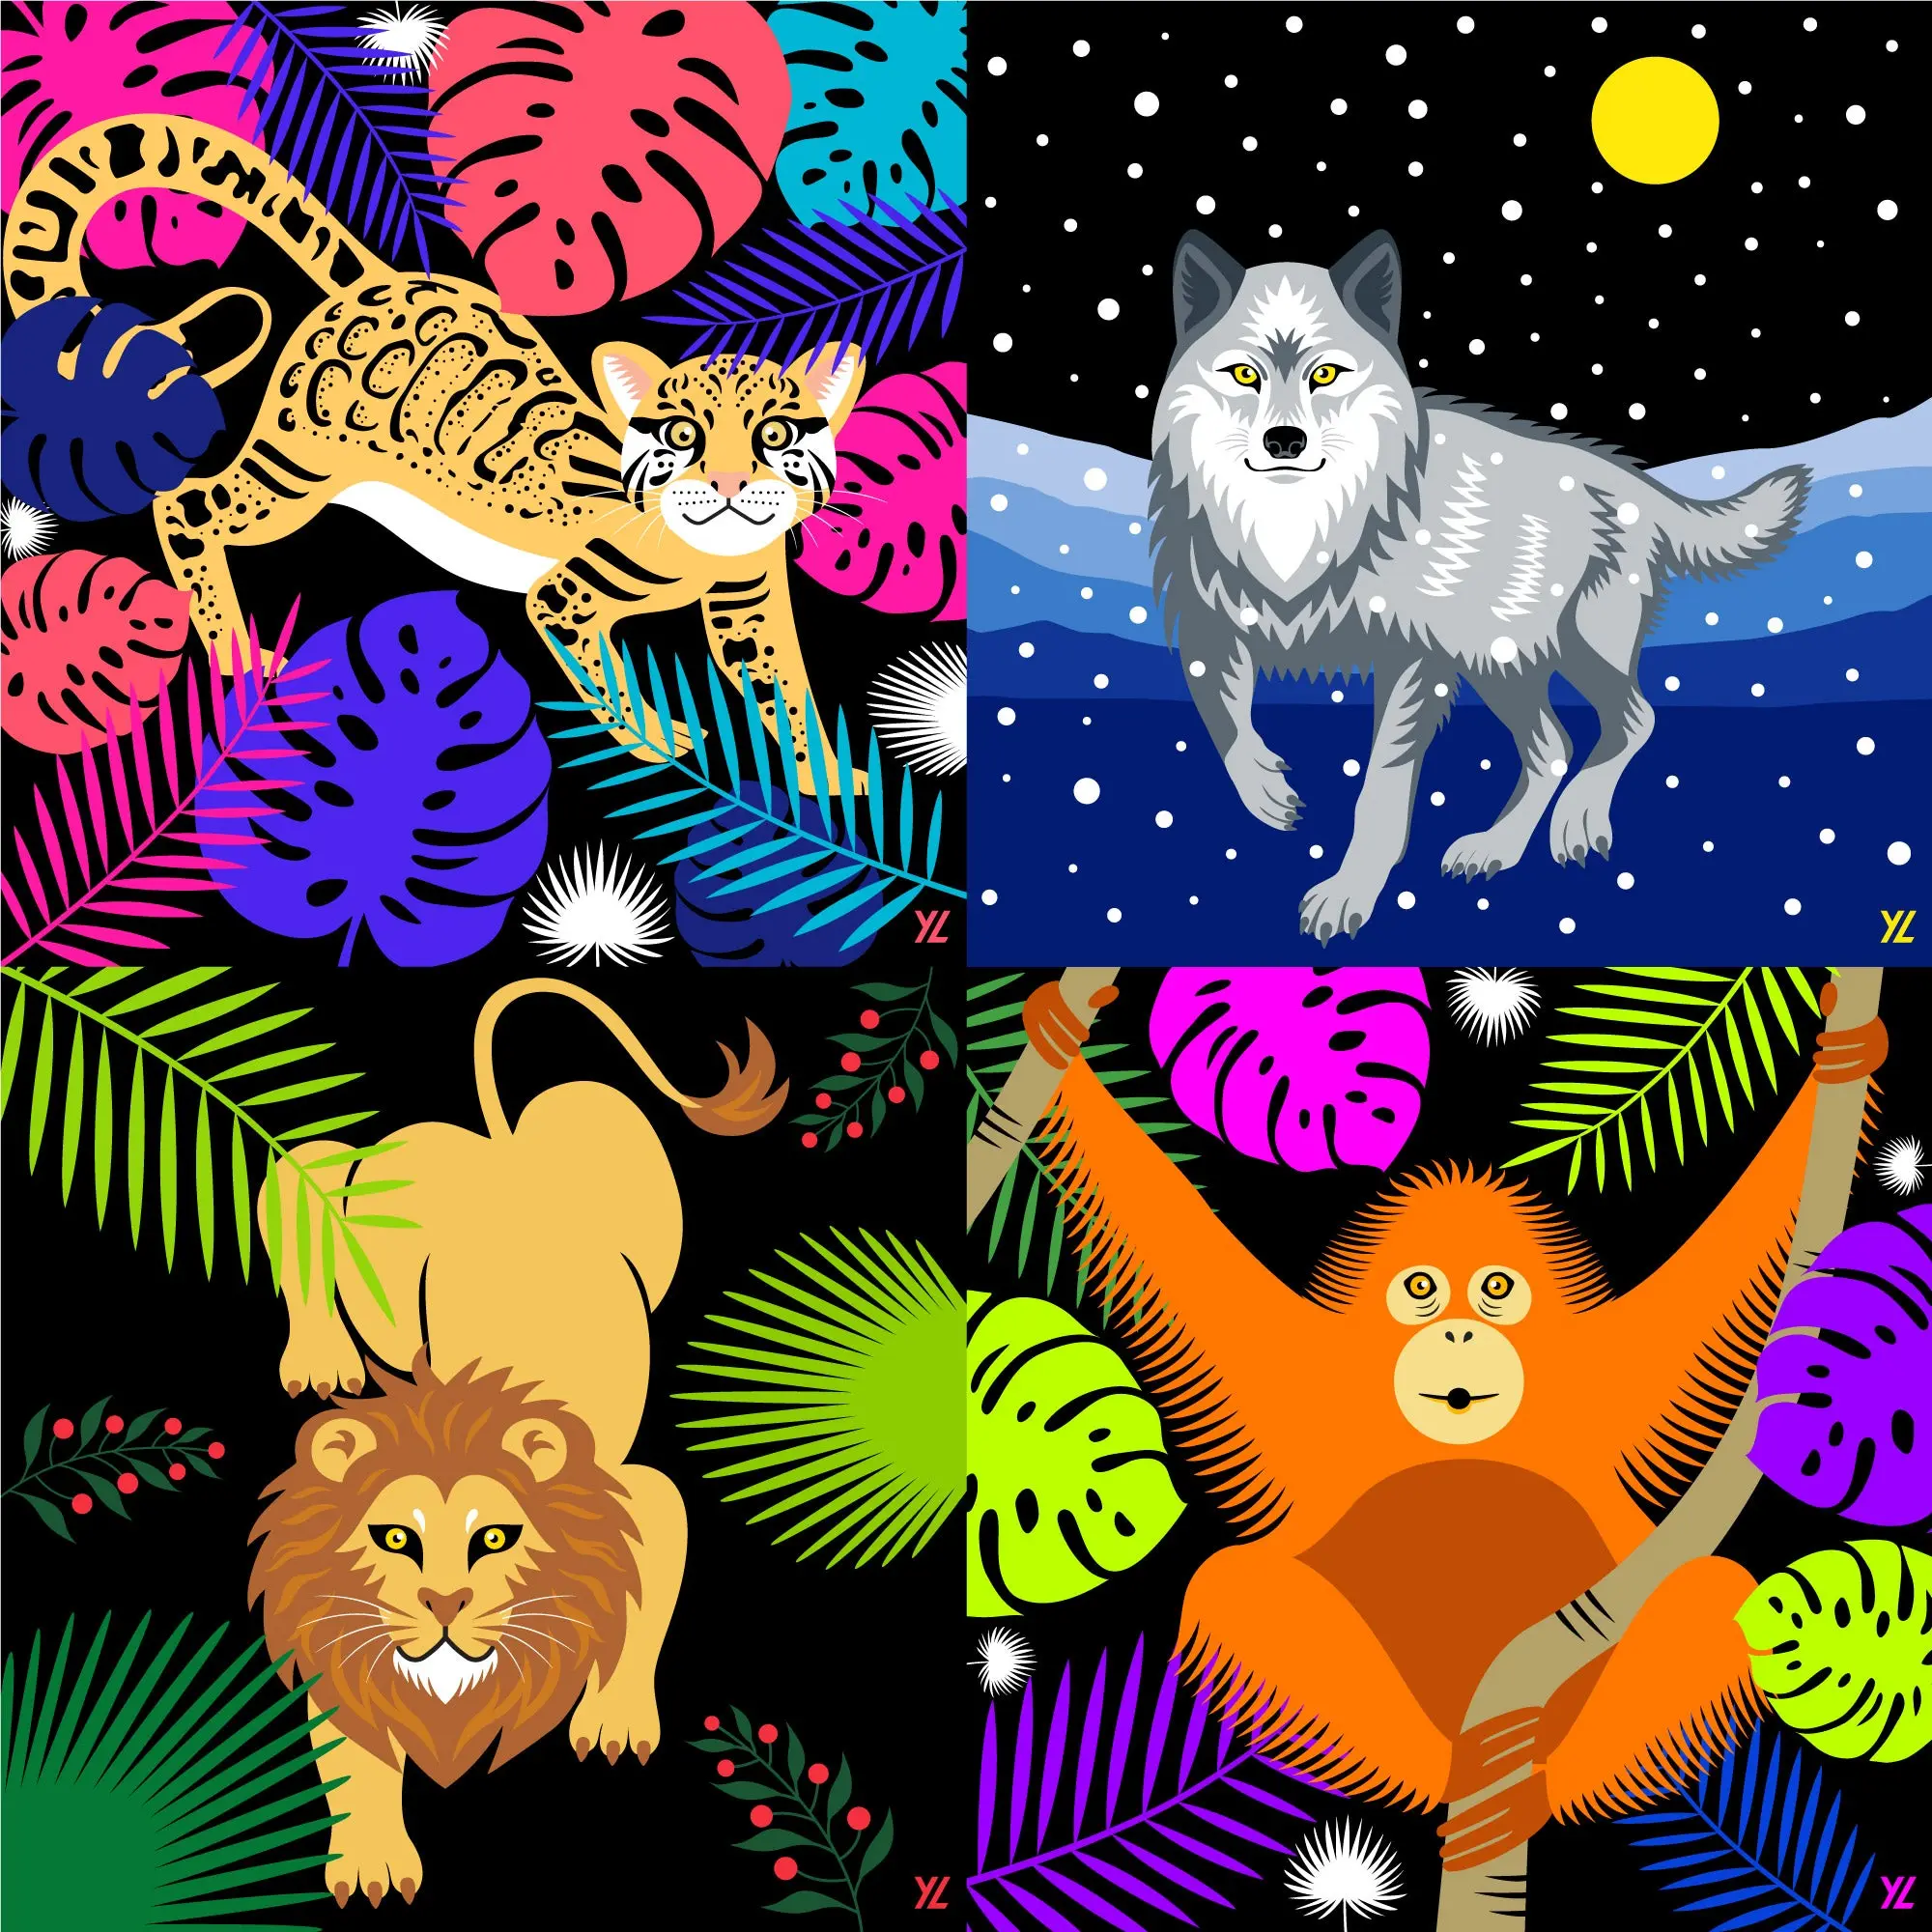 Illustration of endangered animals, a jaguar, wolf, lion, and orangutan.